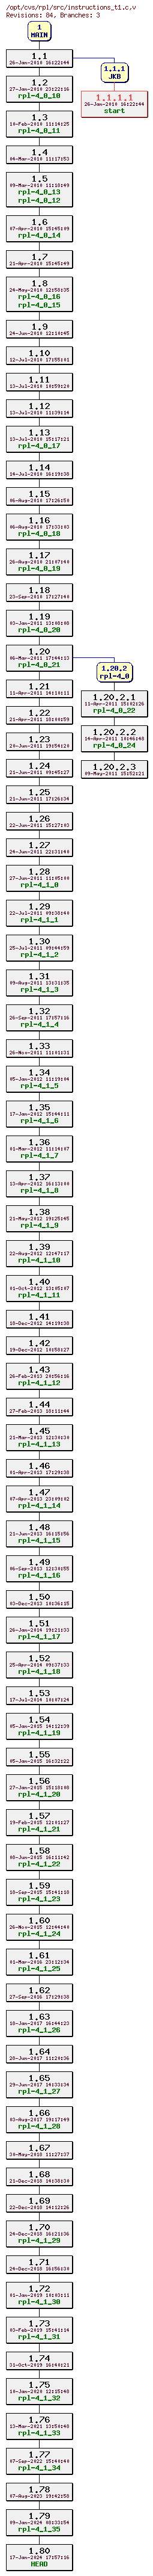 Revision graph of rpl/src/instructions_t1.c